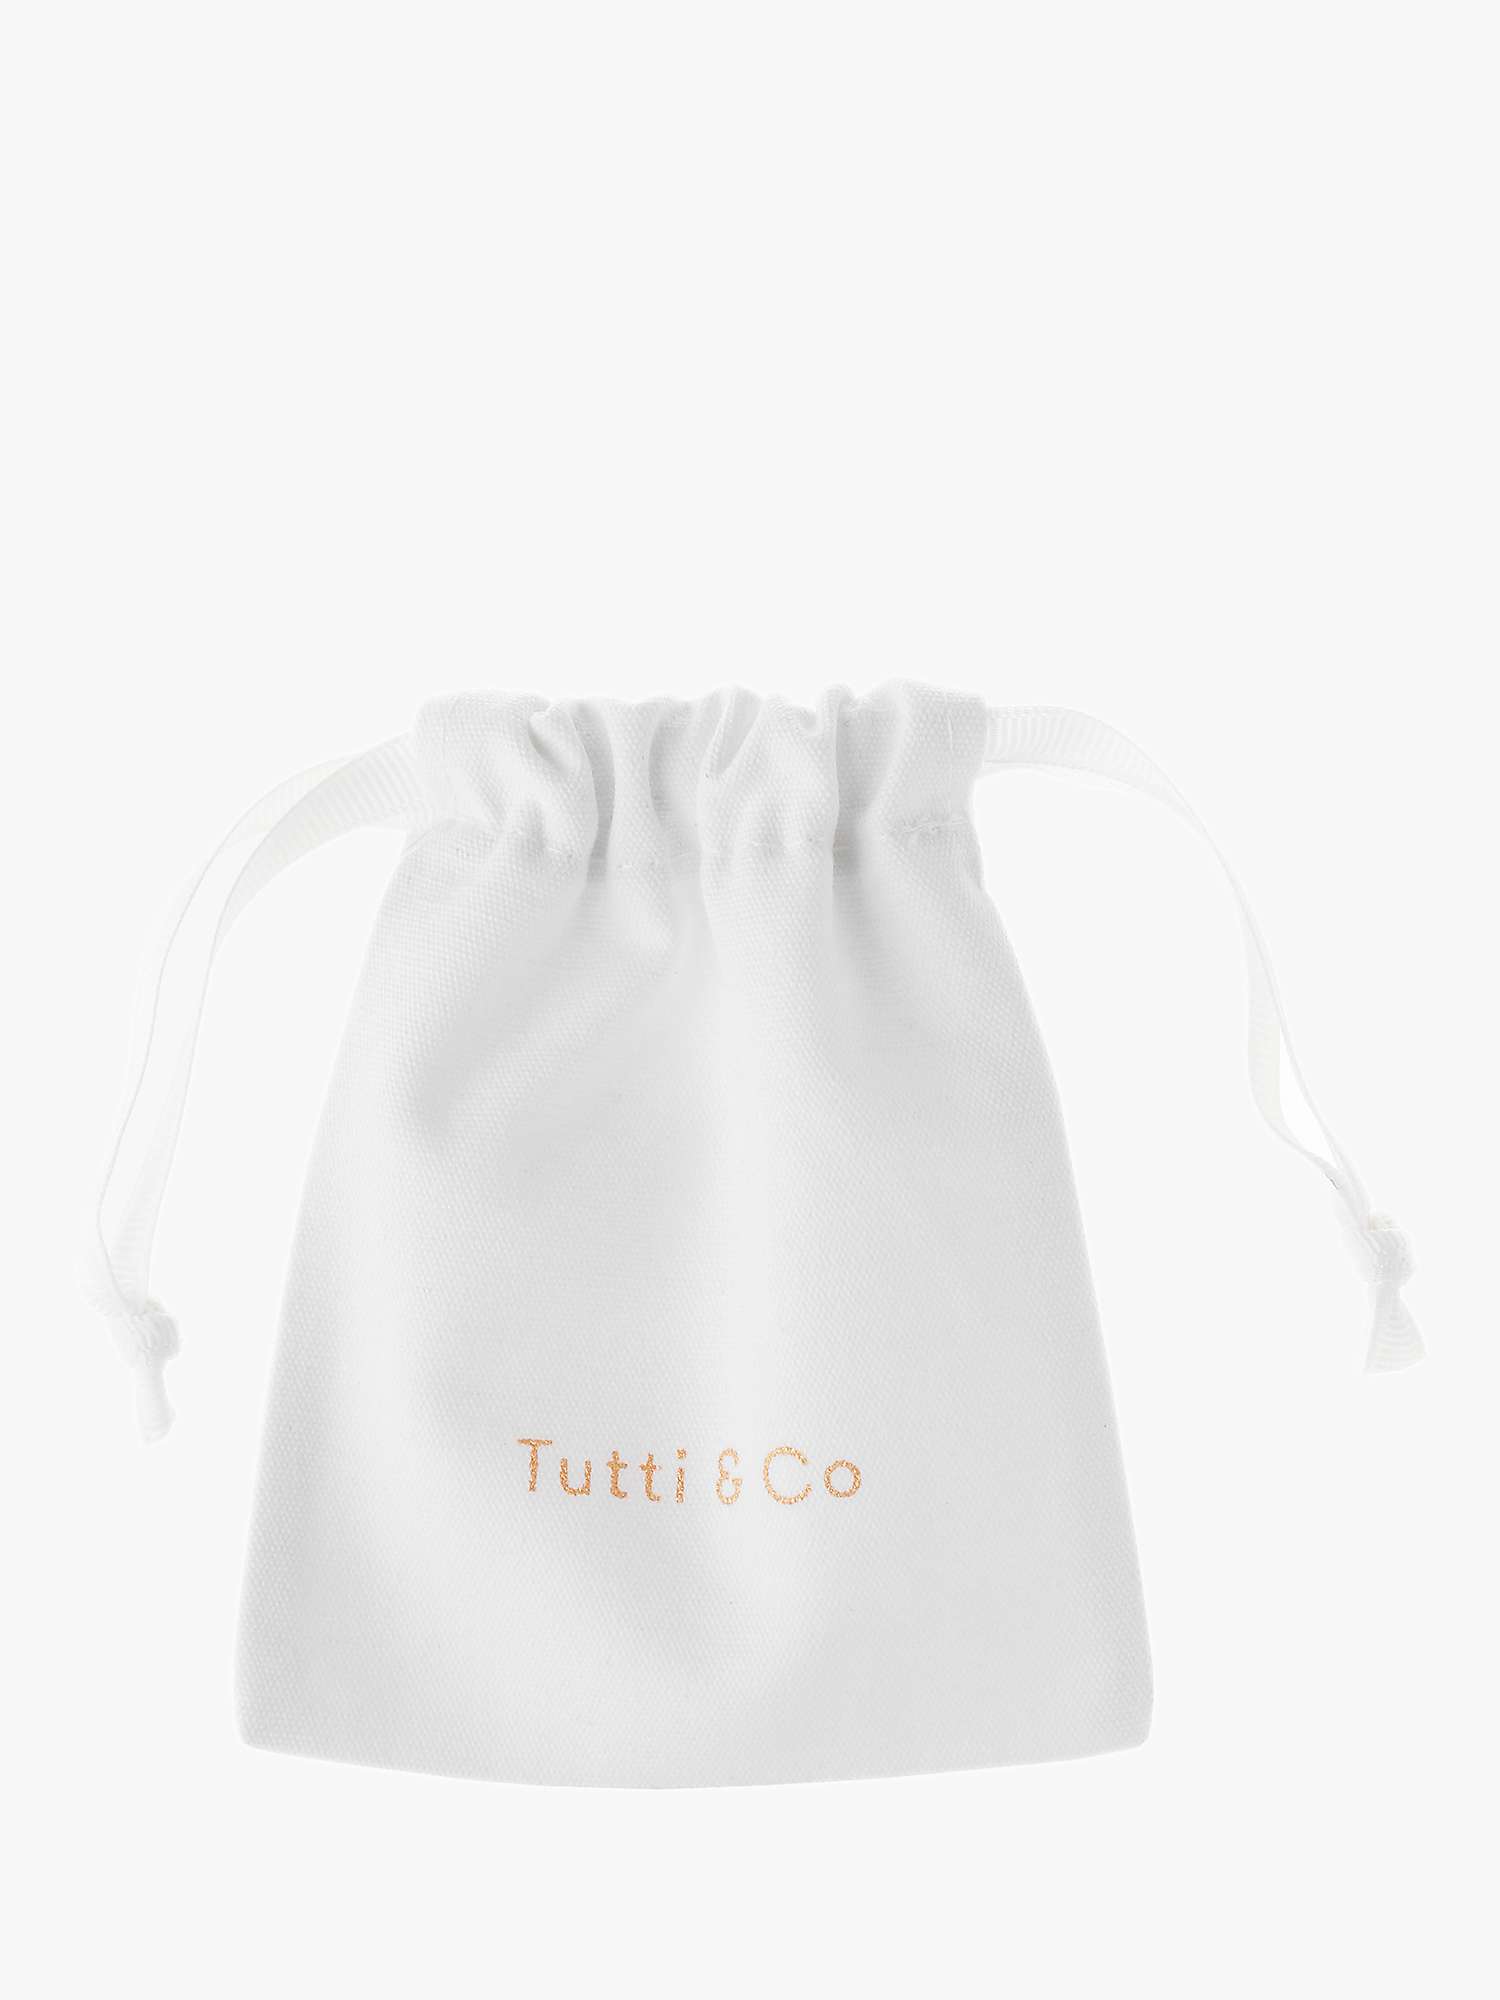 Buy Tutti & Co Cypress Stud Earrings Online at johnlewis.com